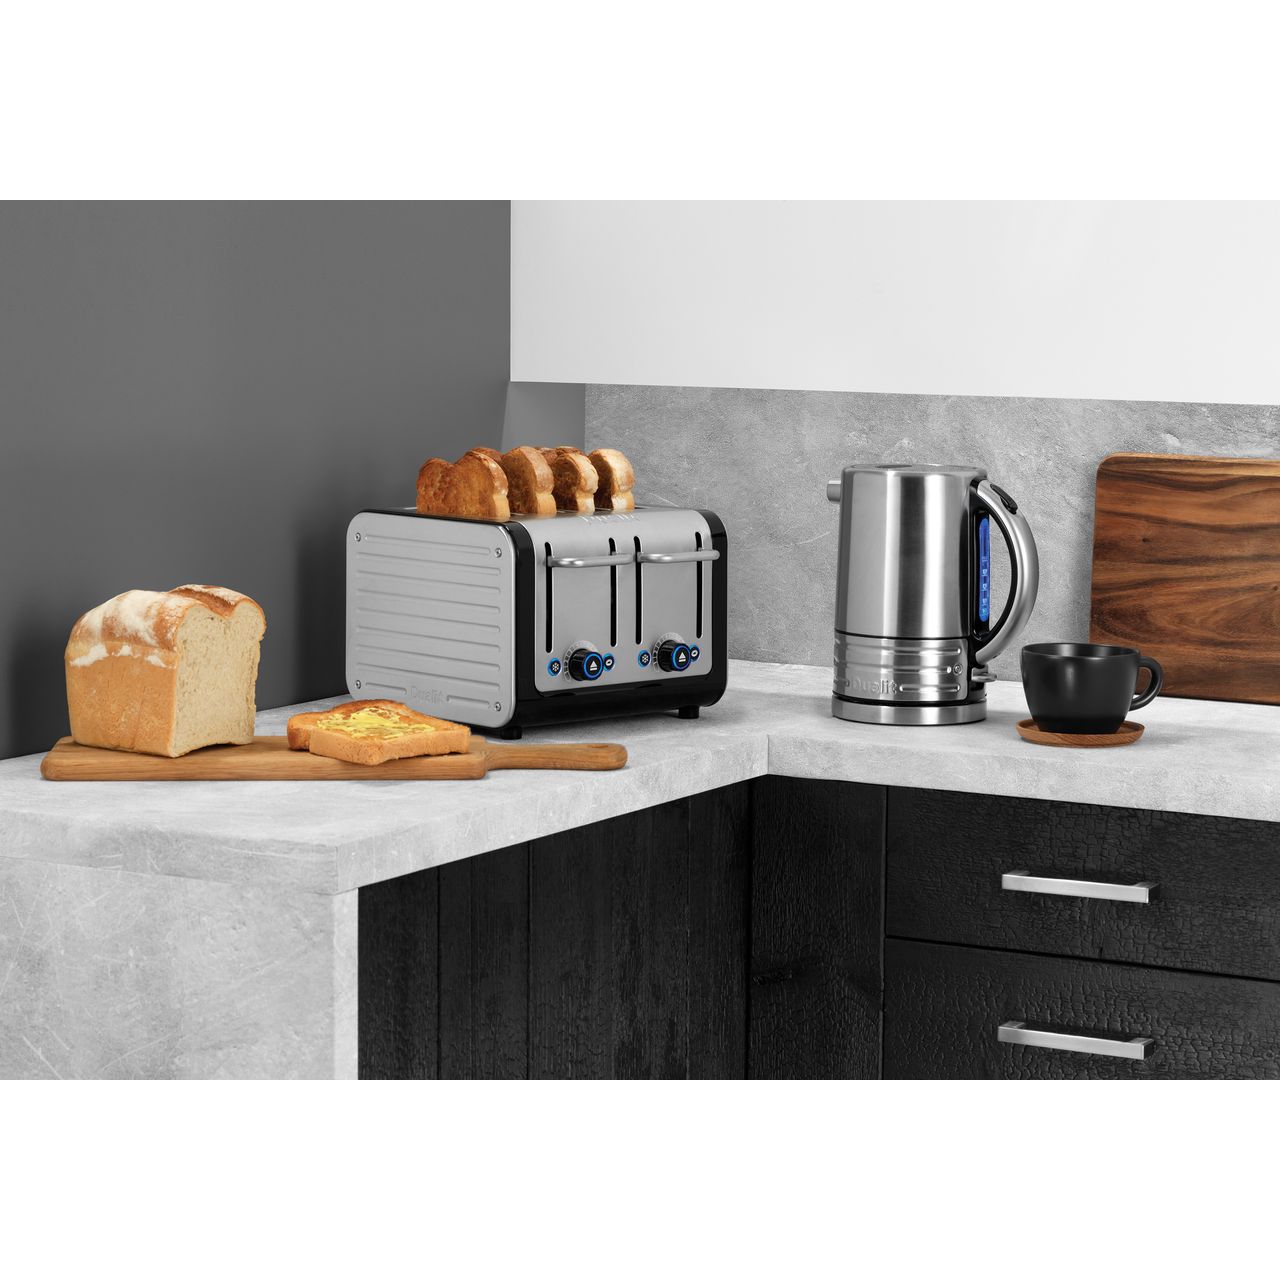 Buy DUALIT Architect 26505 2-Slice Toaster - Black & Stainless Steel